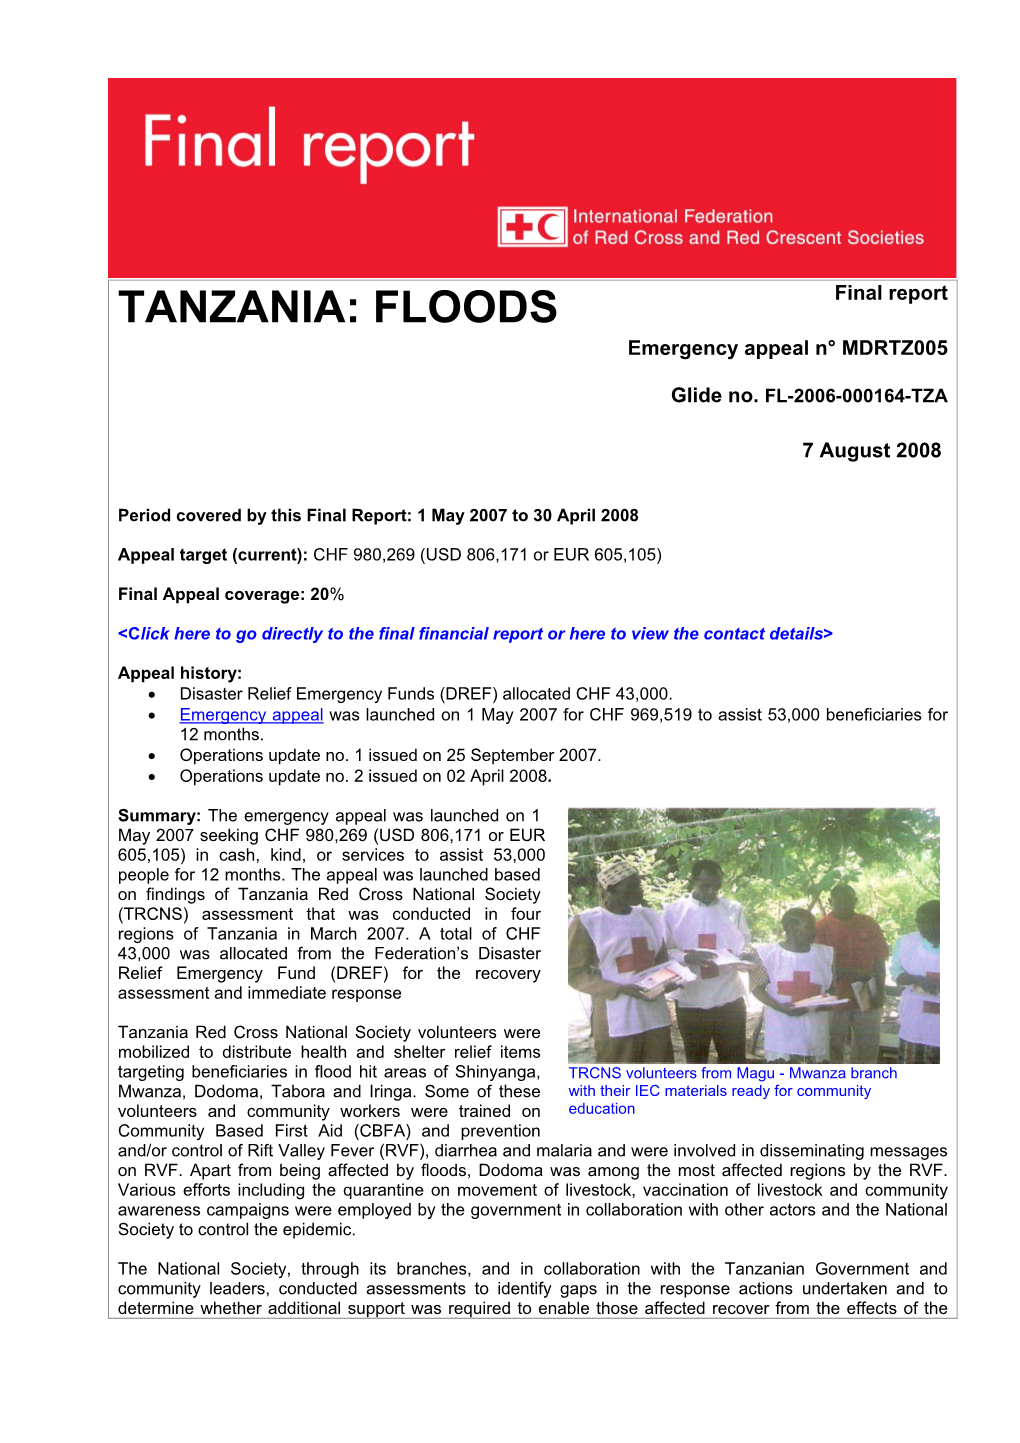 TANZANIA: FLOODS Final Report